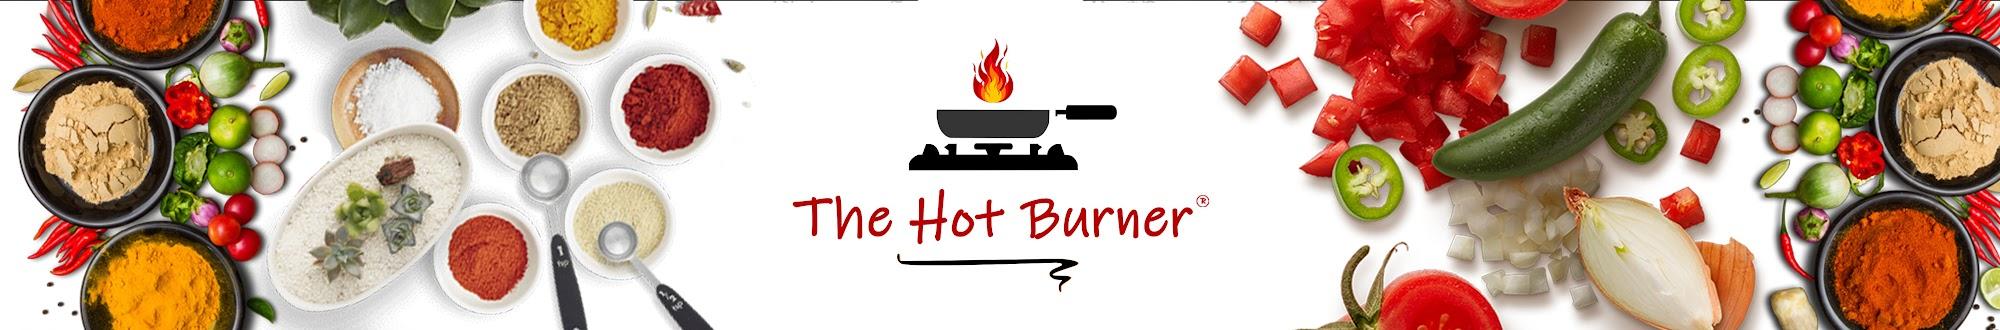 The Hot Burner